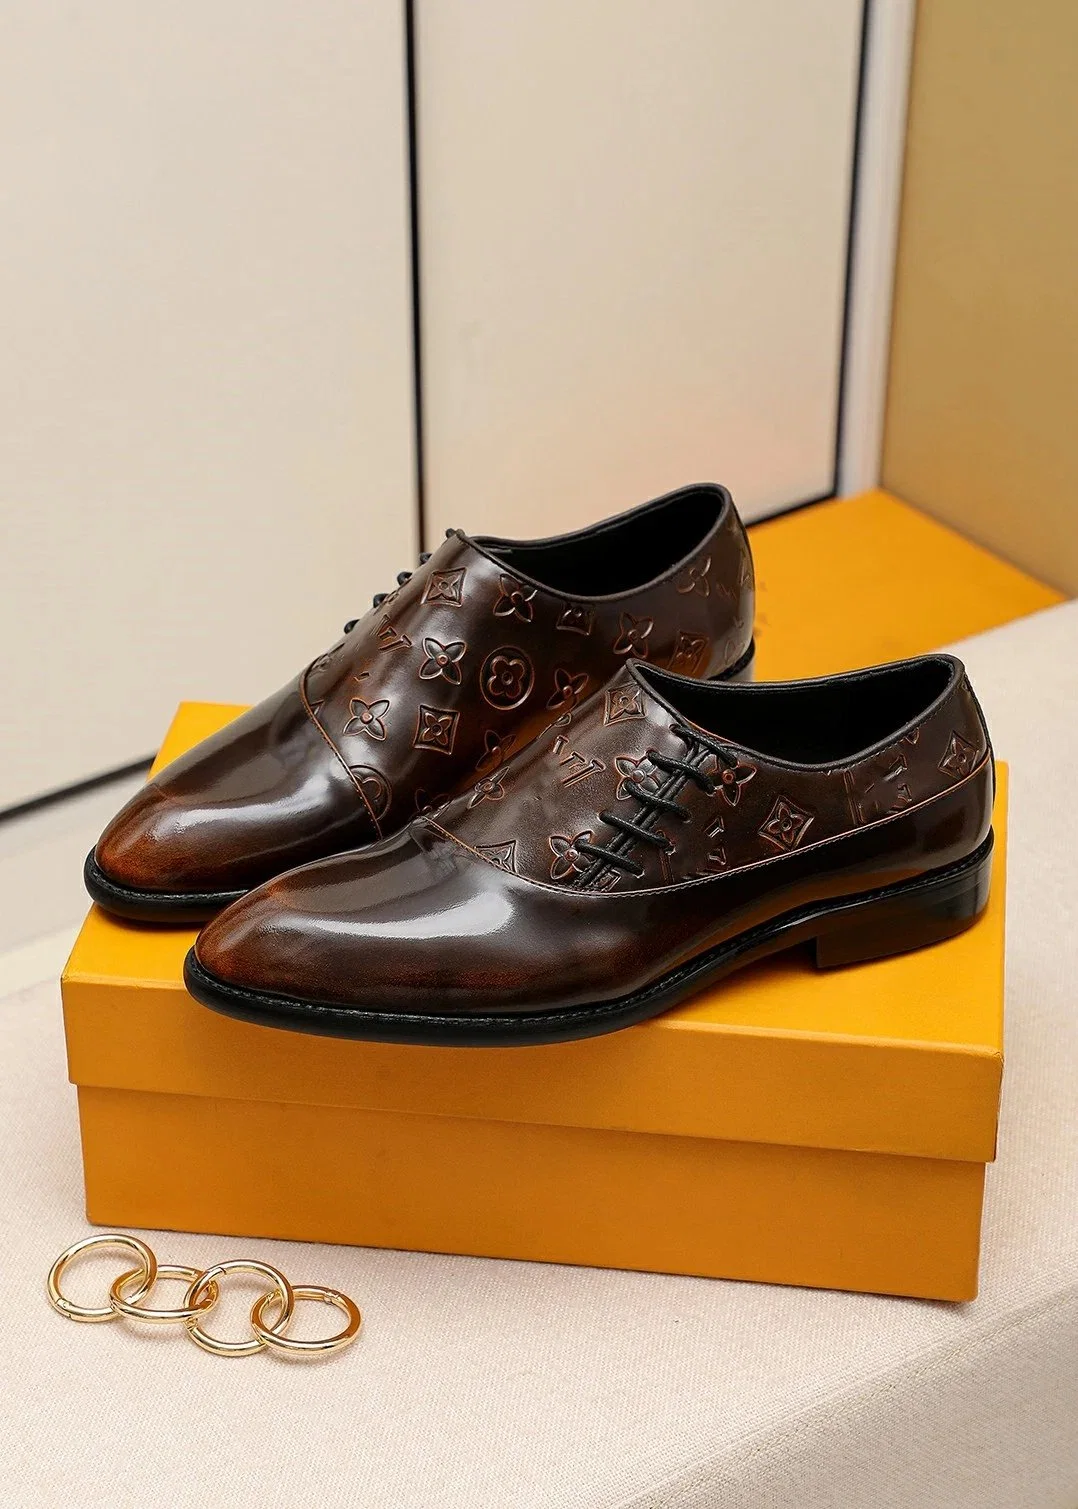 Wholesale/Supplier High-End Balenciag'a's Shoes Designer Business Formal Leather Shoes Gucc'i's Shoes